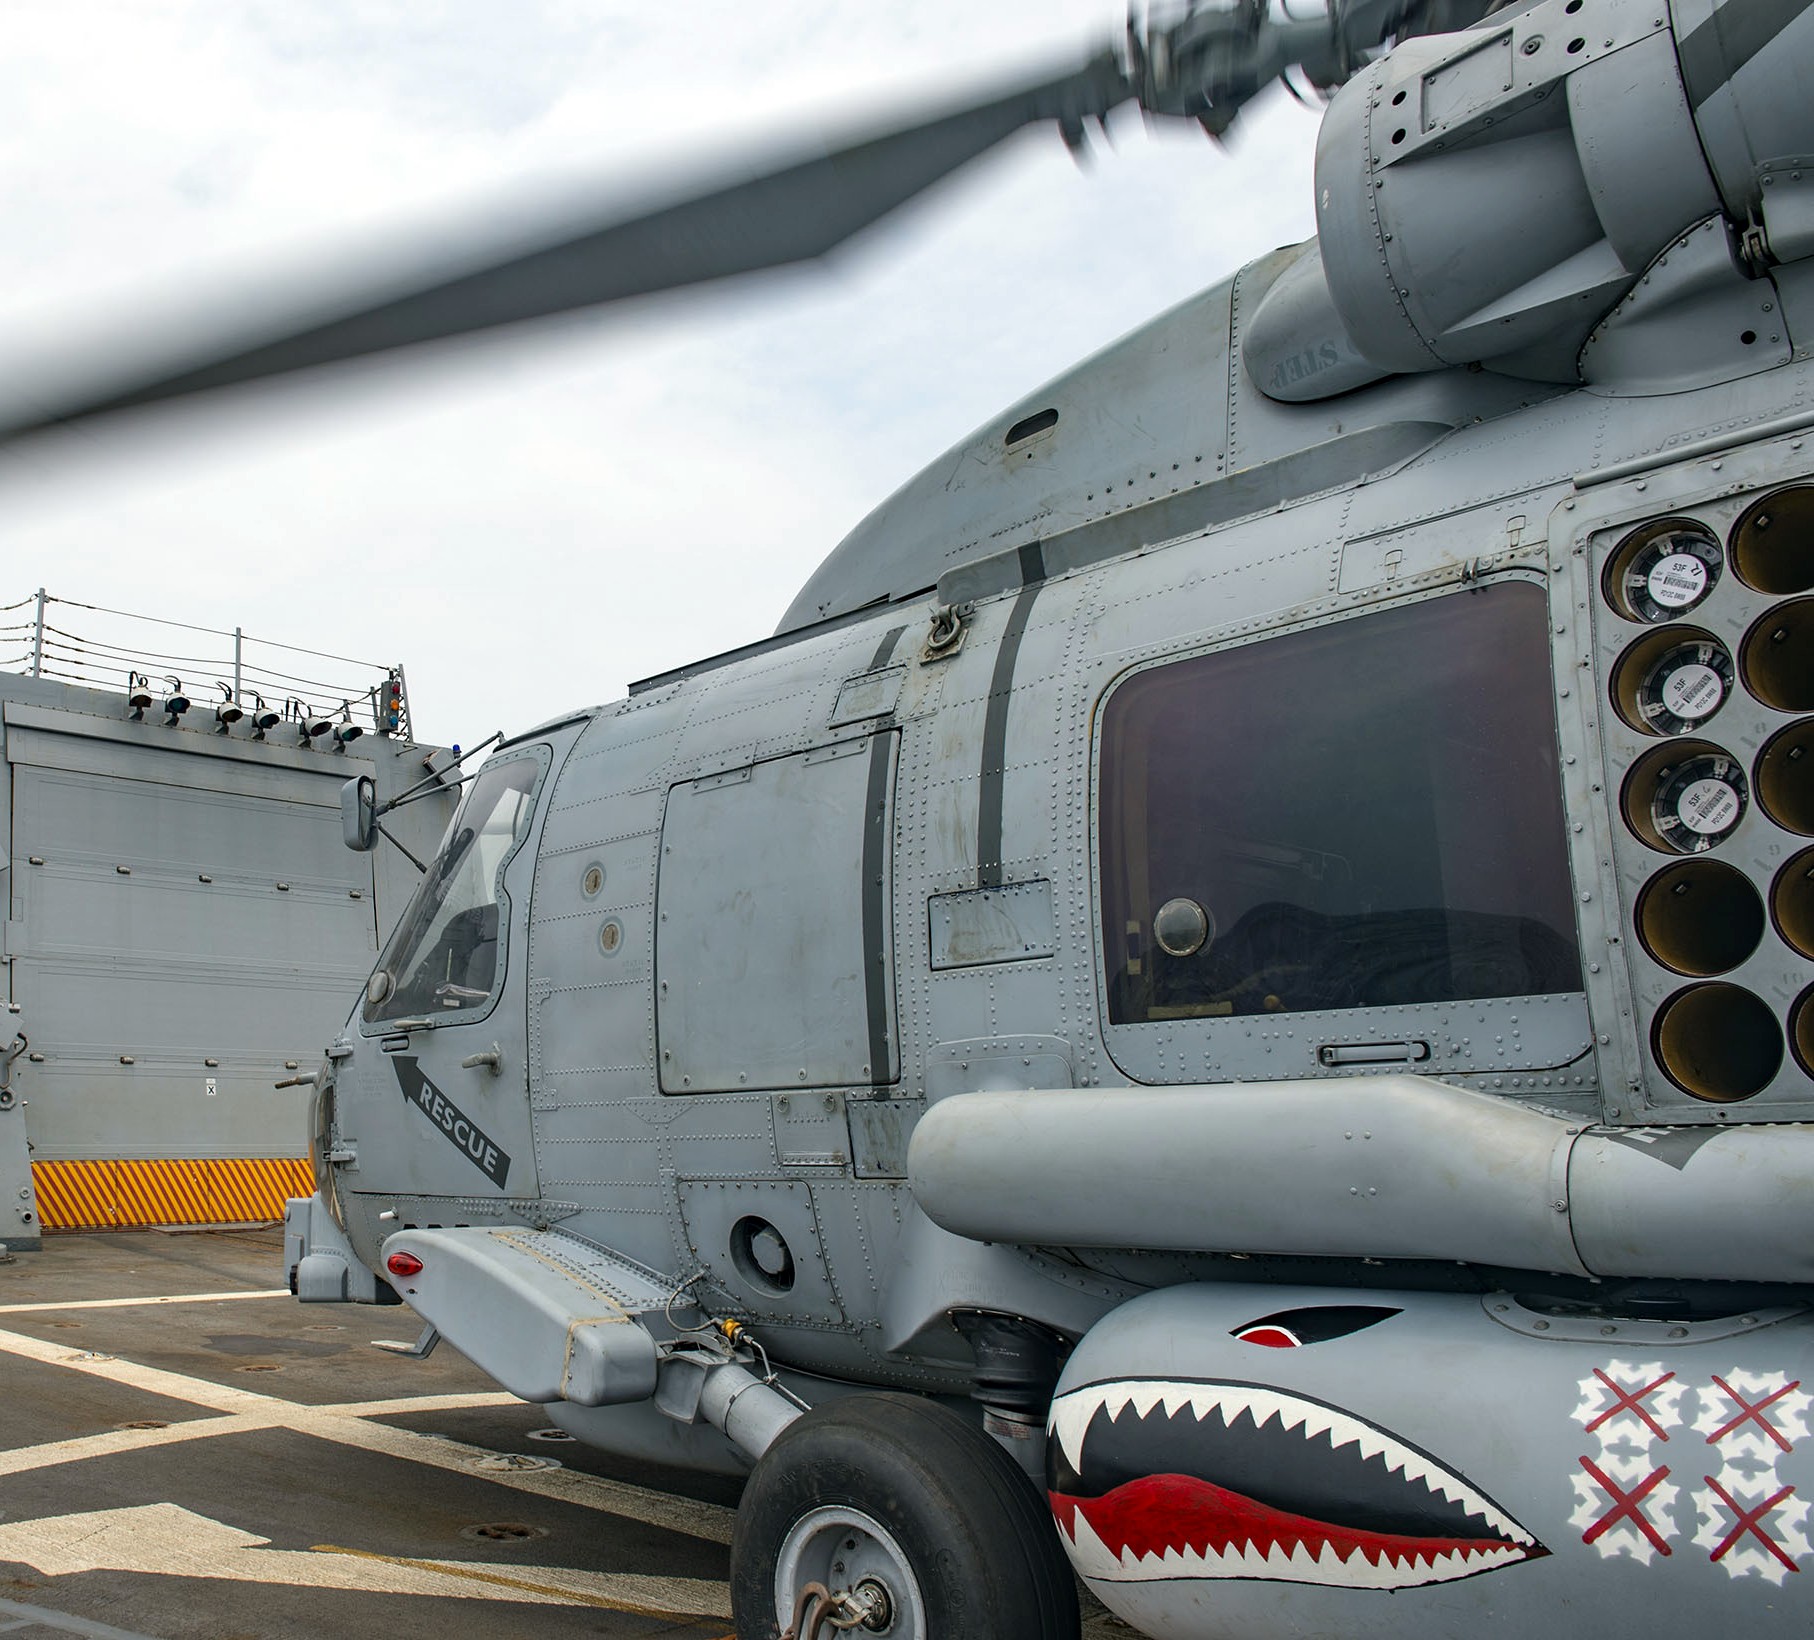 hsm-60 jaguars helicopter maritime strike squadron navy mh-60r seahawk 2016 08 uss lassen ddg-82